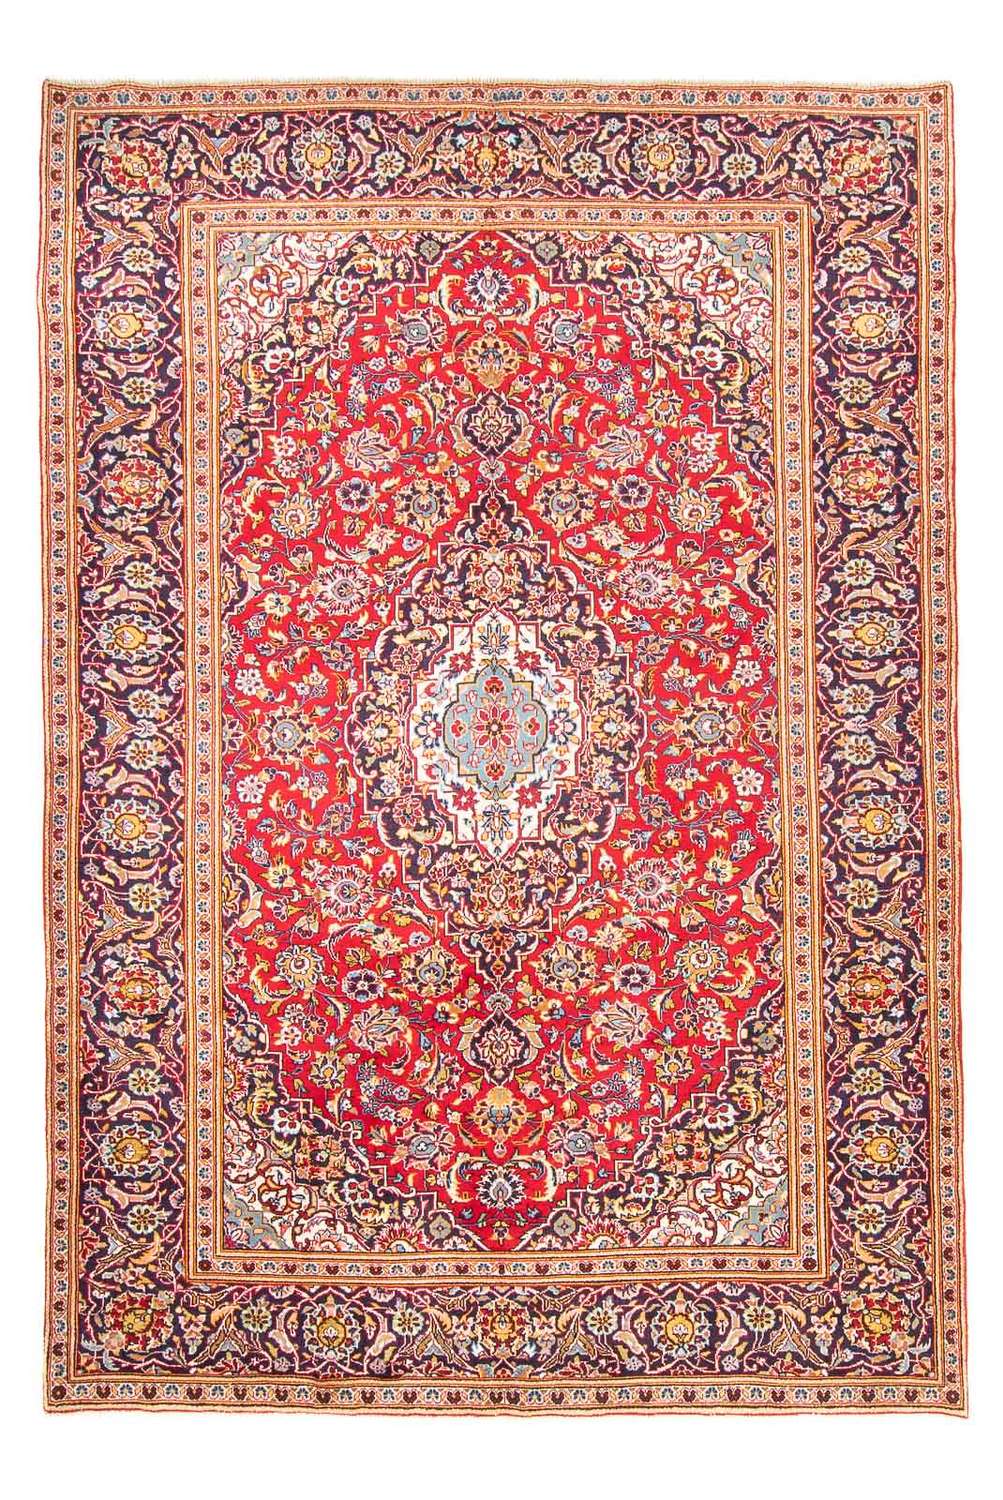 Perzisch tapijt - Keshan - 290 x 195 cm - rood